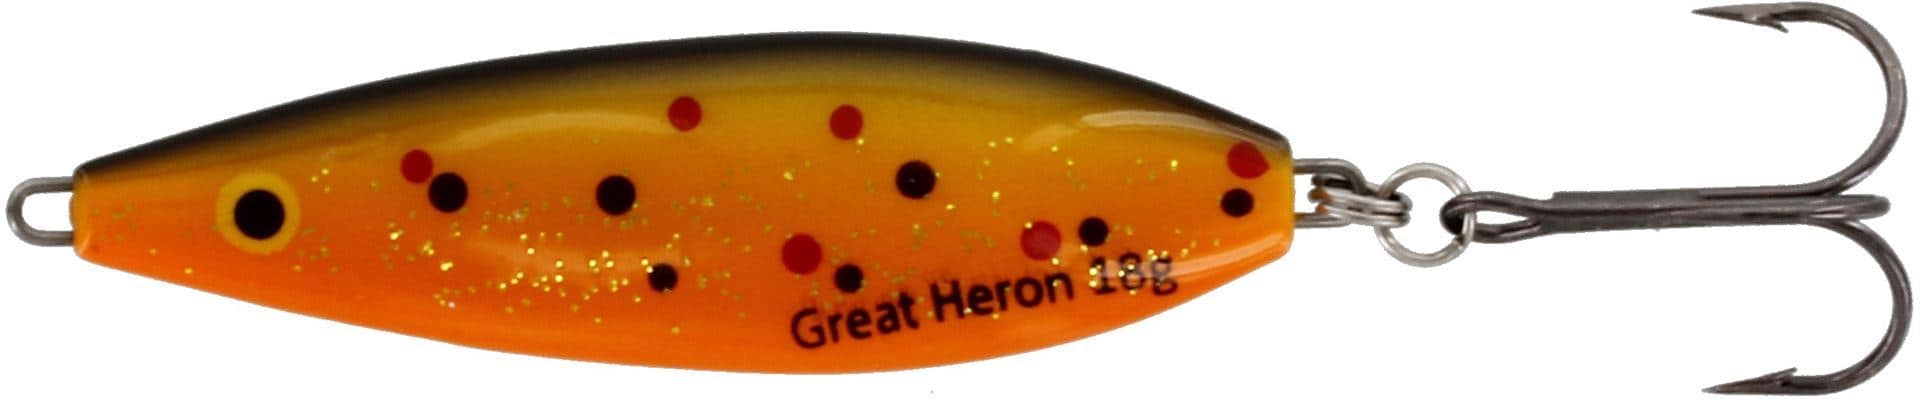 Westin Great Heron 13g Firepox 5,5cm